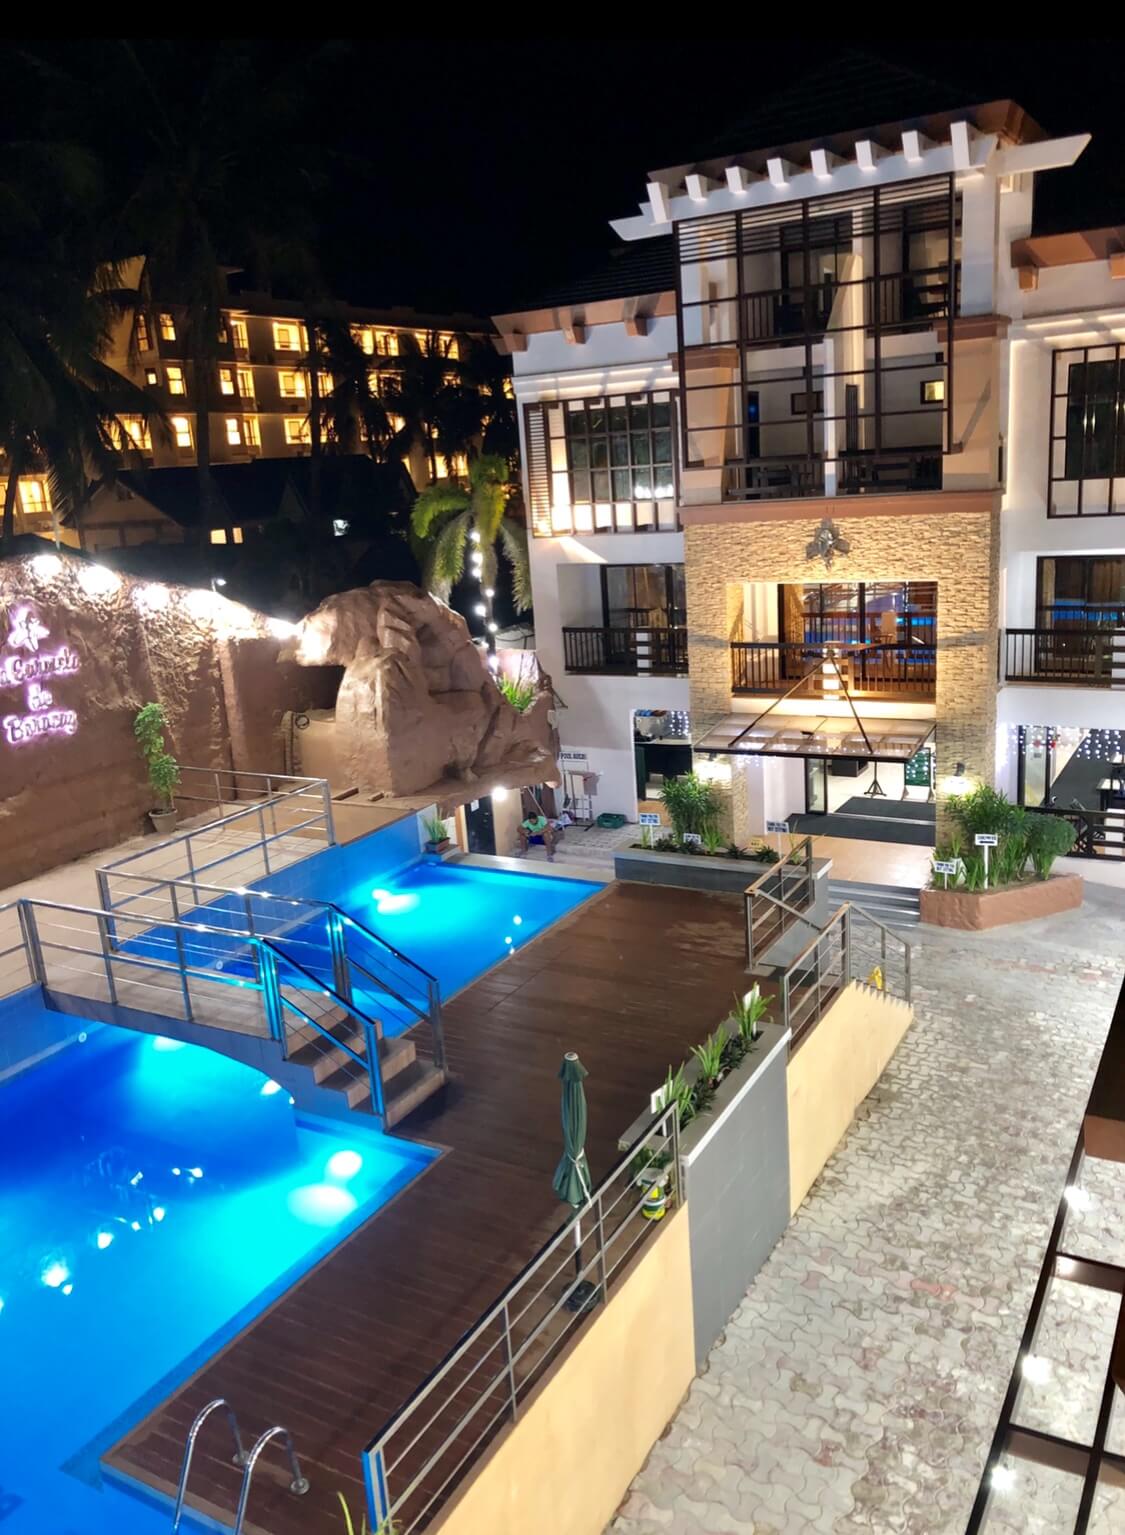 La Carmela de Boracay is one of the affordable Boracay hotels